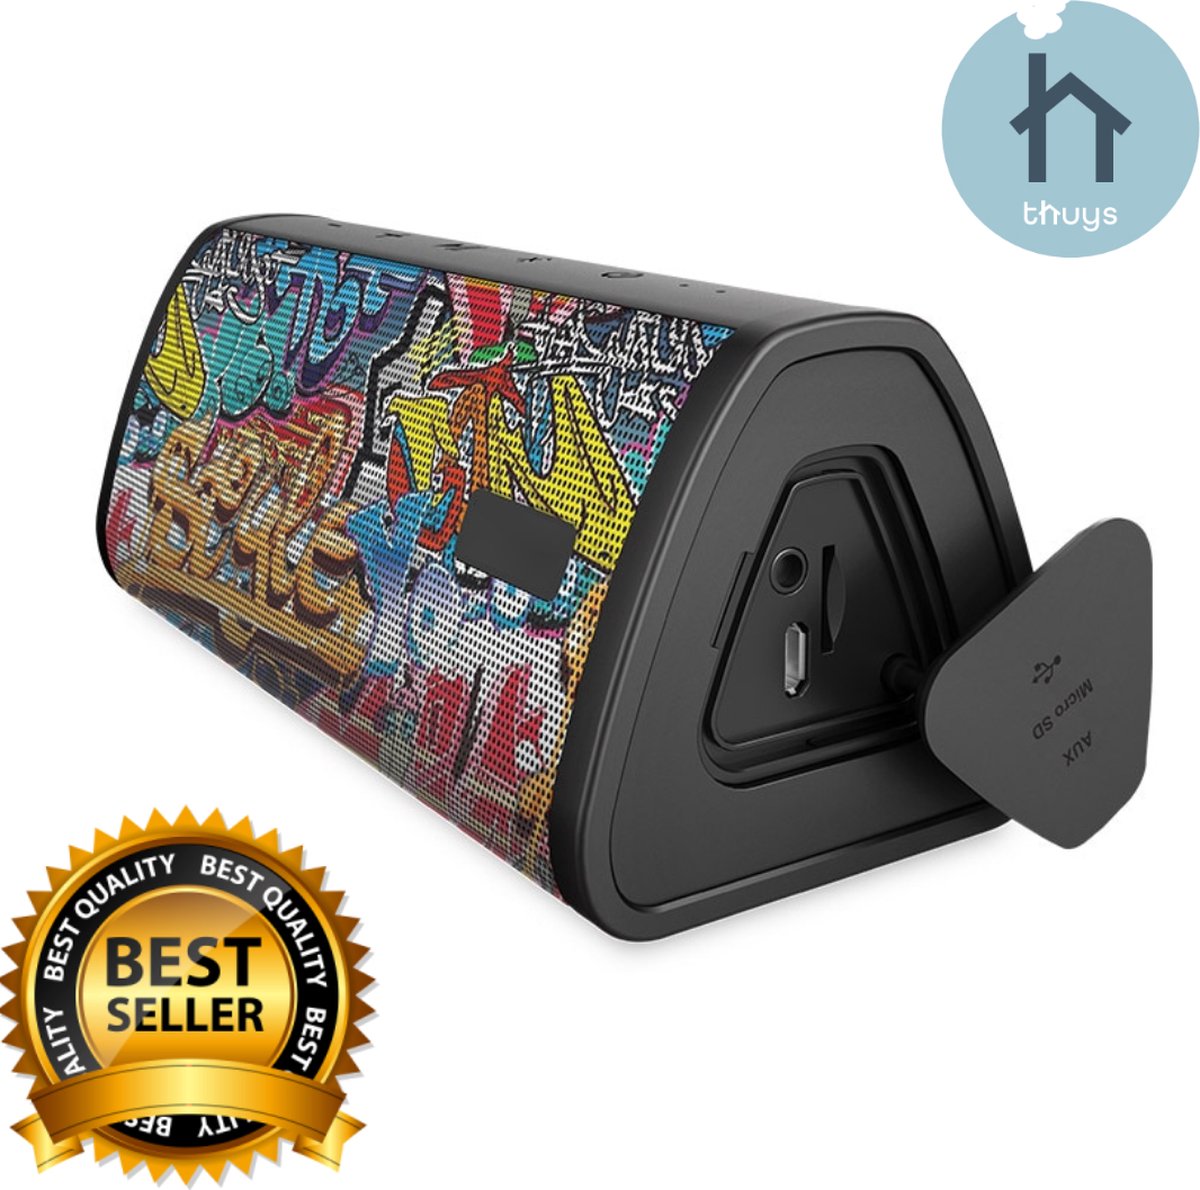 Thuys Krachtige Bluetoothspeaker - Draadloze Bluetooth Speaker - Waterdicht - 360 Graden Surround Sound - Black Graffiti Look